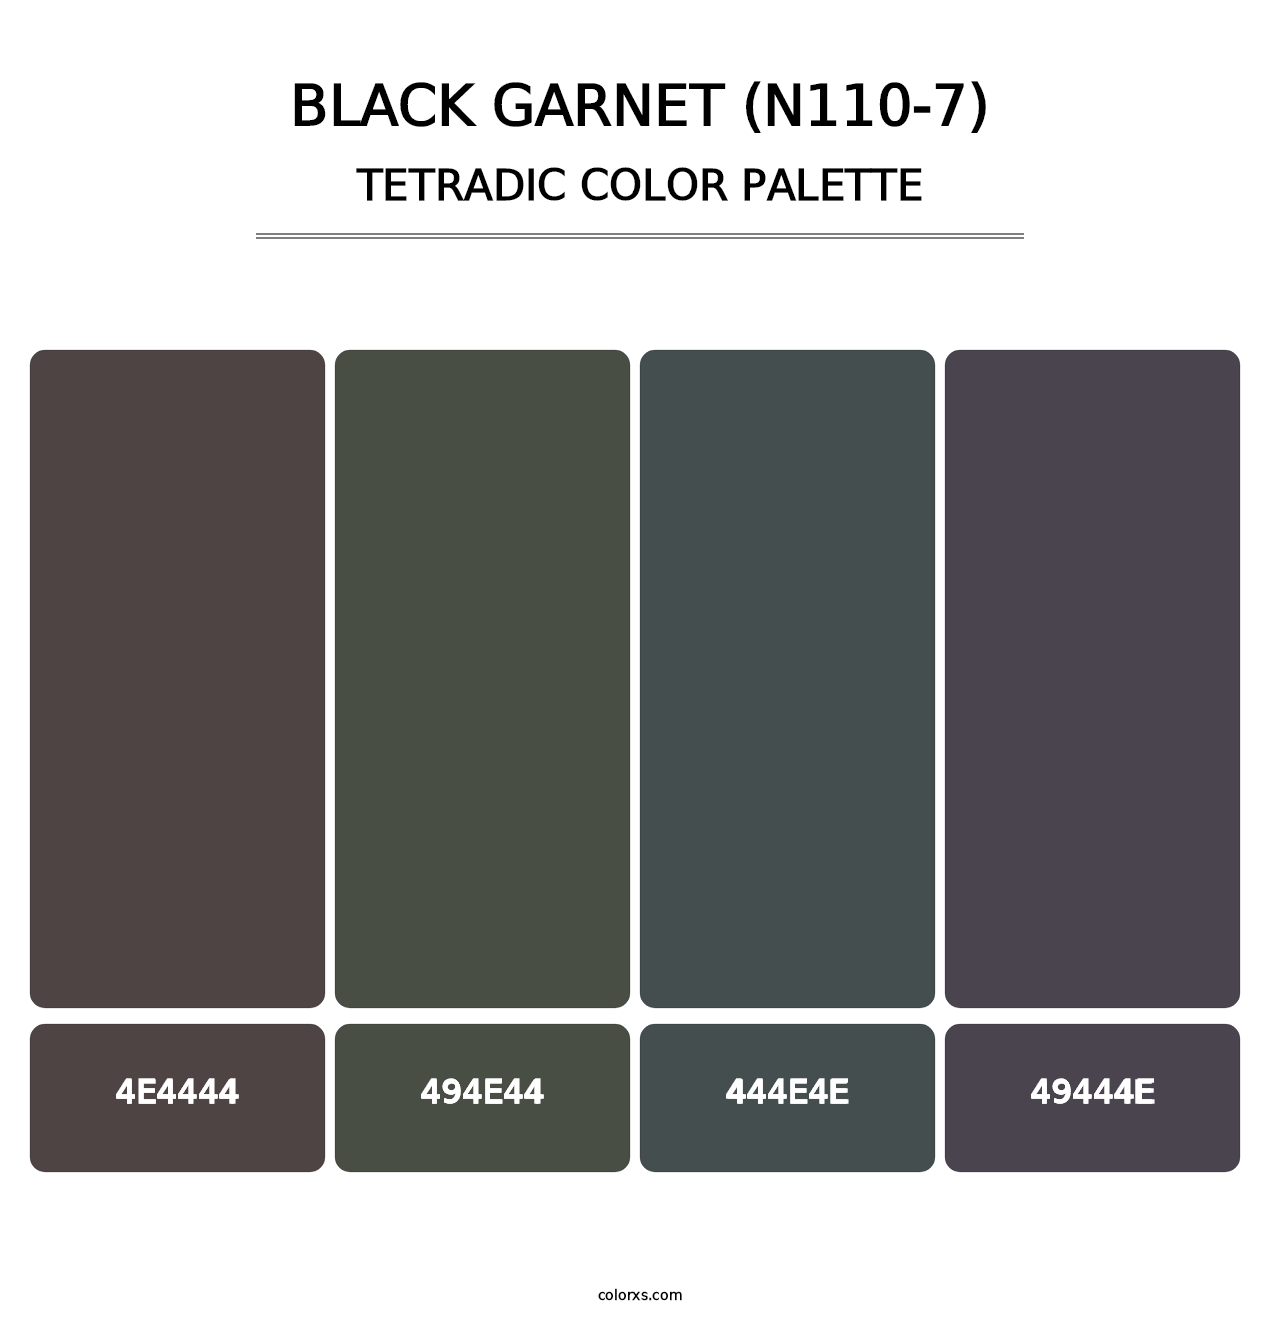 Black Garnet (N110-7) - Tetradic Color Palette